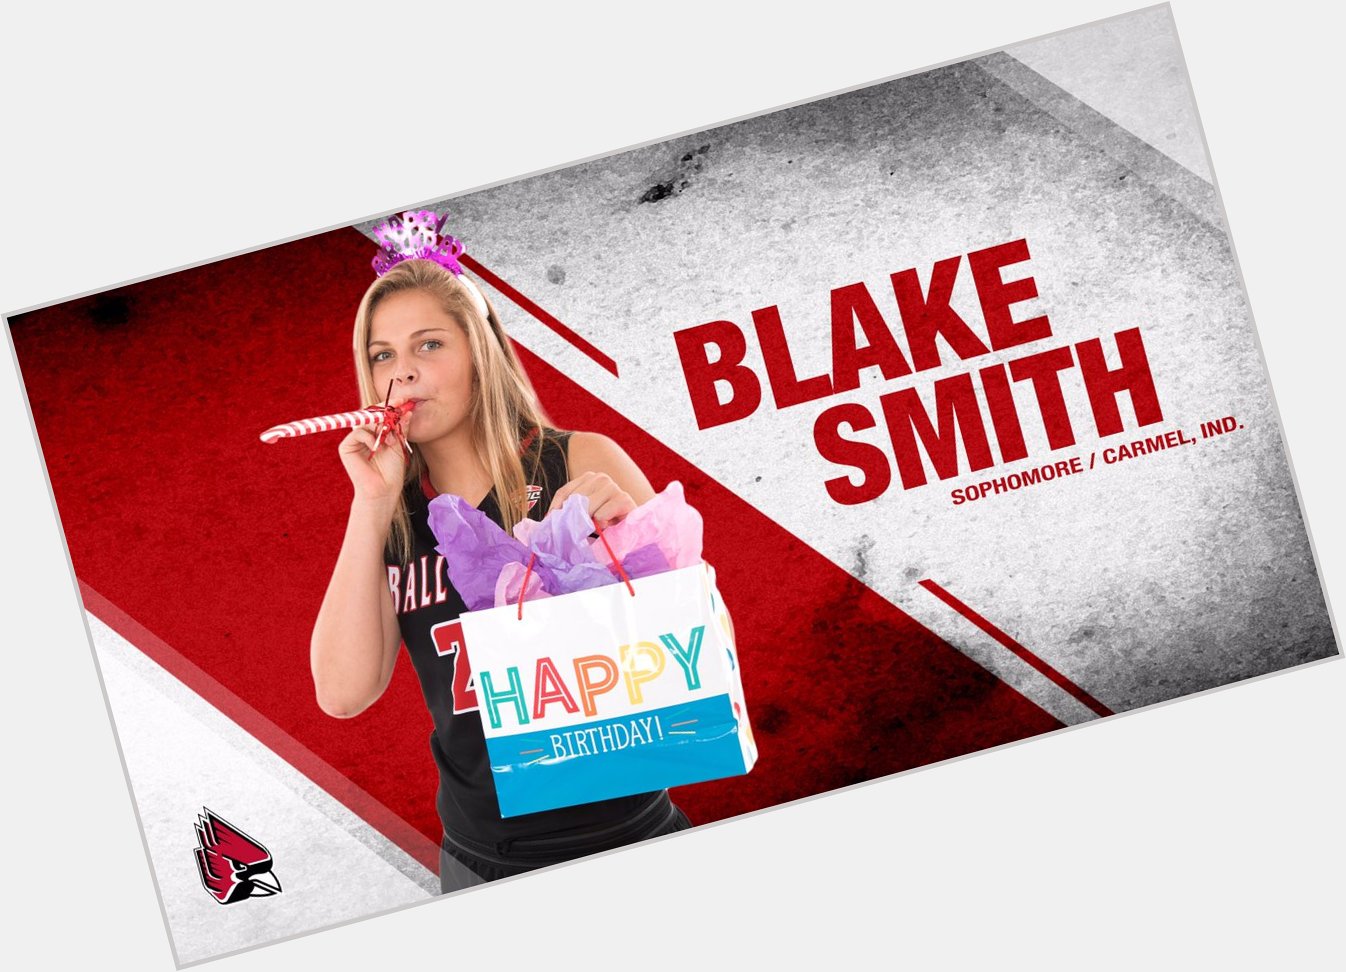 Happy birthday to sophomore forward, Blake Smith!  